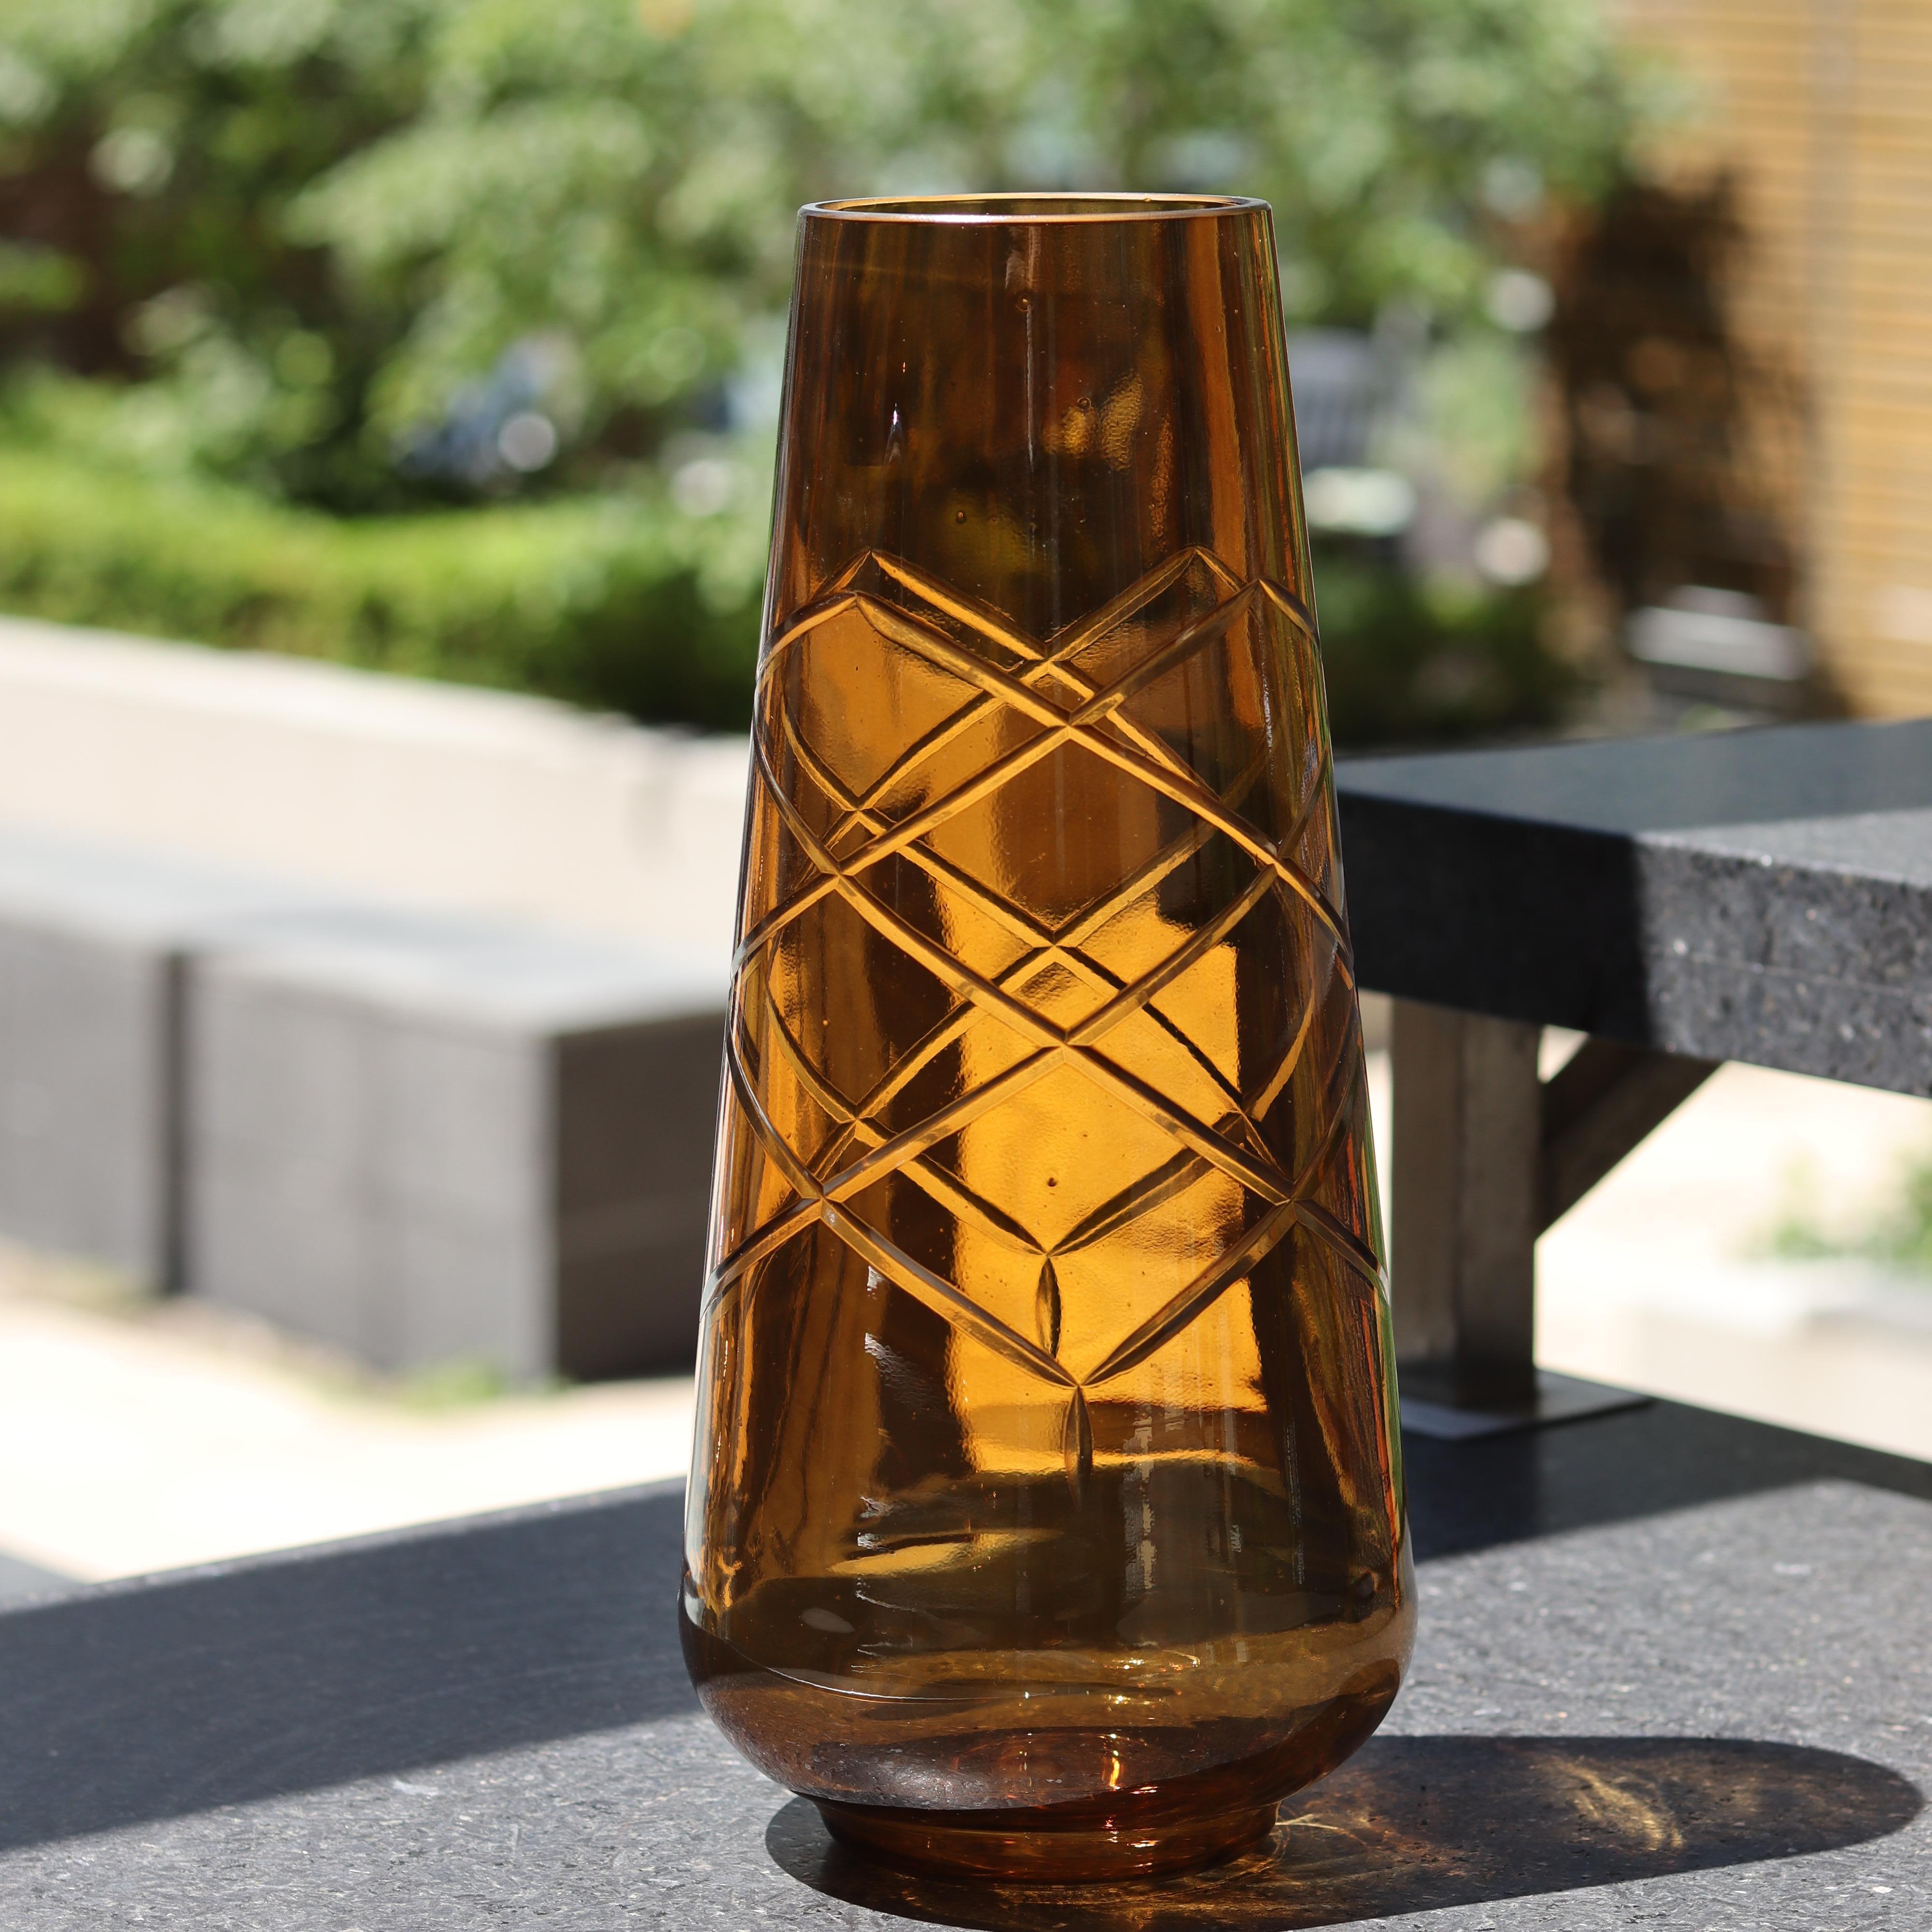 2K1M Girata, Murano Glass Vases - Moka Colour - Made on the Island of Murano For Sale 1